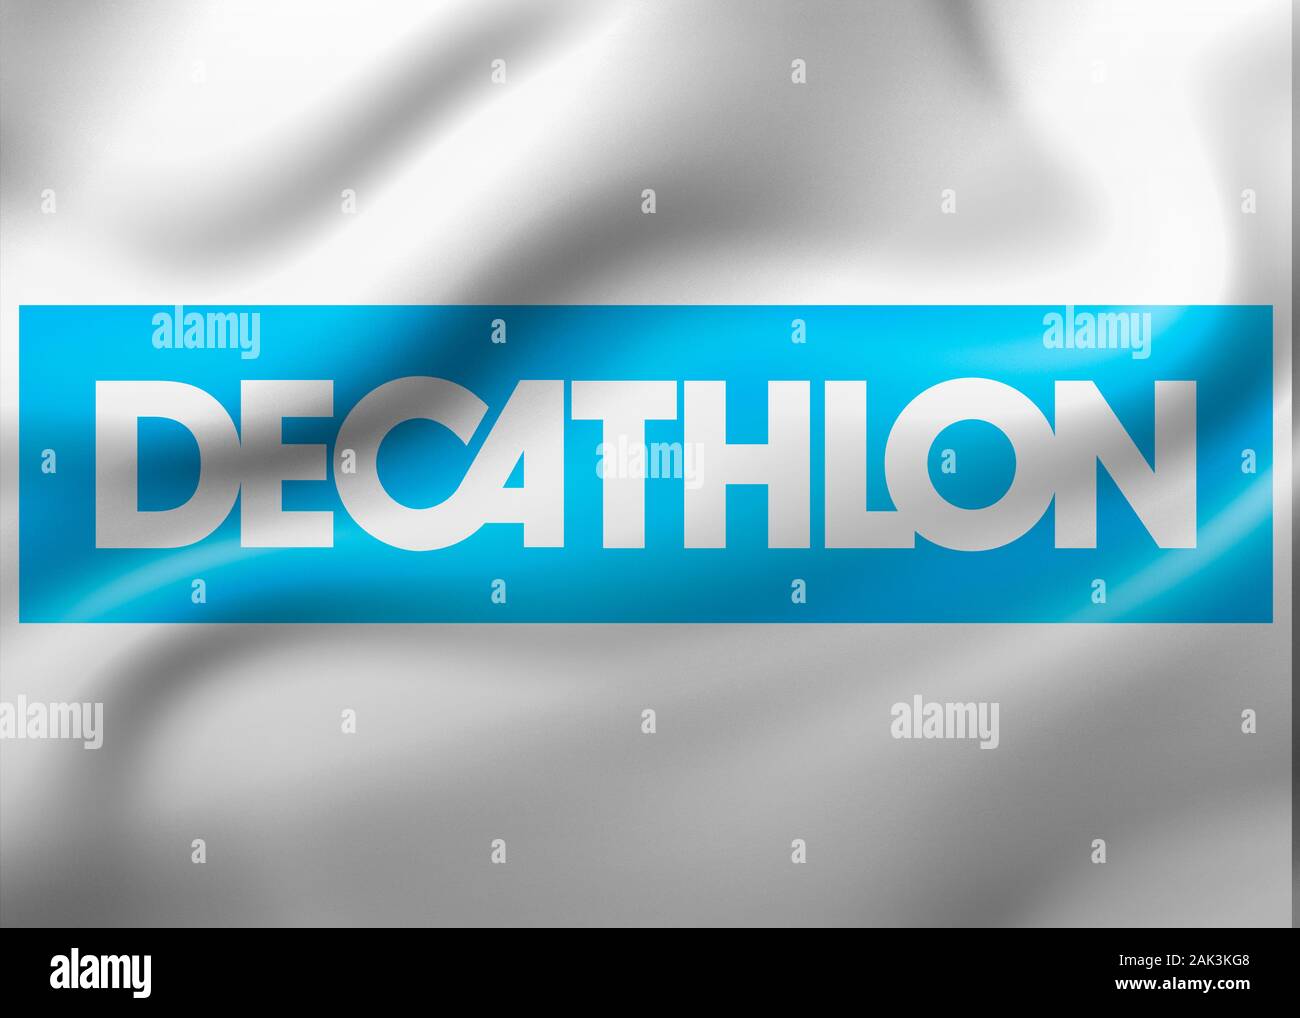 Decathlon logo Stock Photo - Alamy